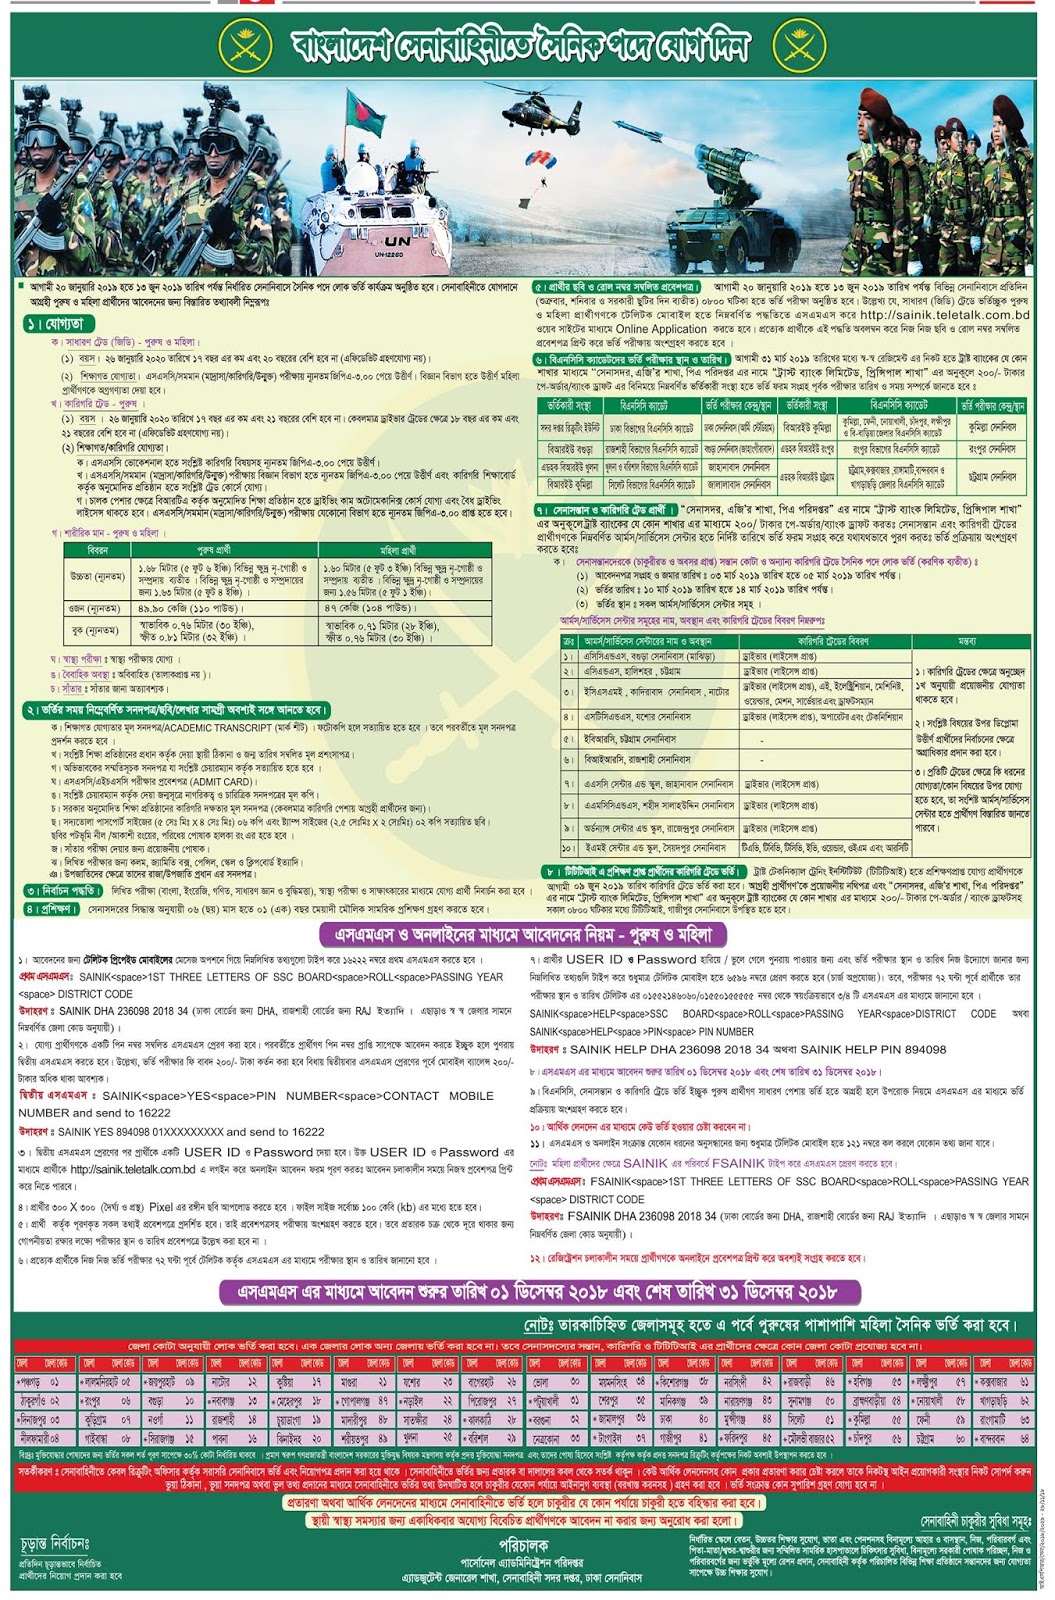 Bangladesh Army Sainik Recruitment Circular 2018